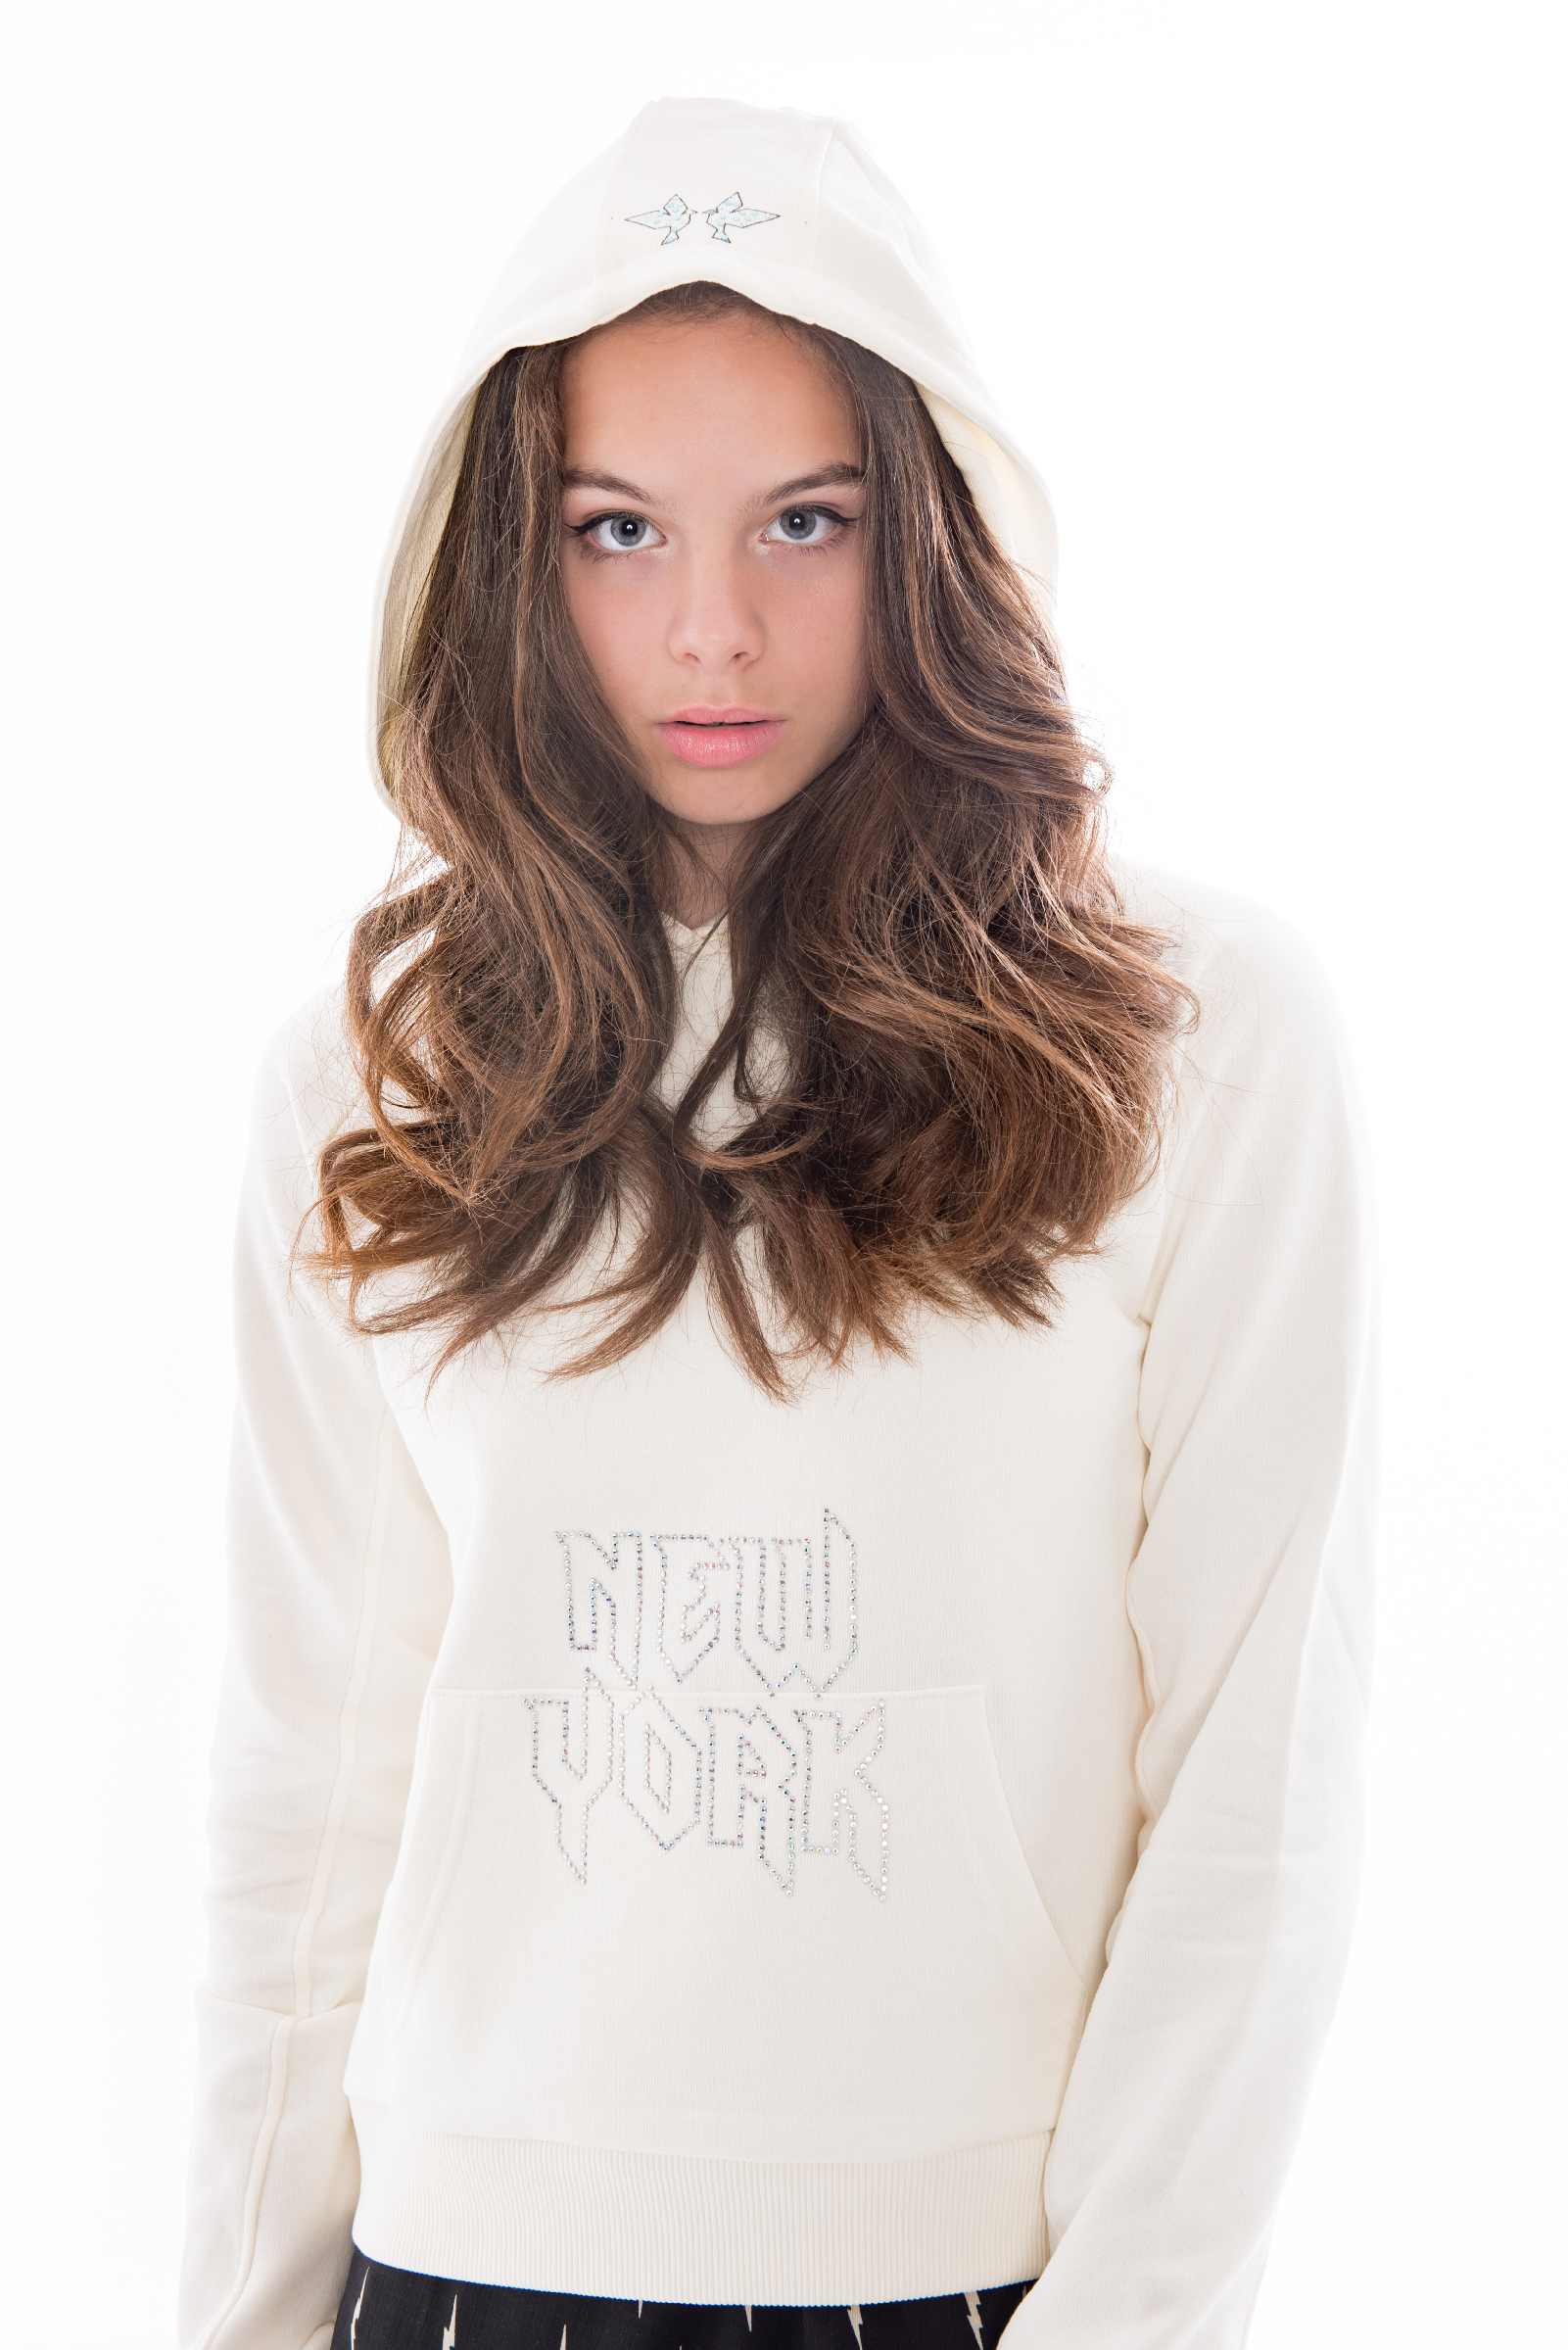 Meisjes Nina Sweater van Frankie & Lib in de kleur Off White in maat 176.